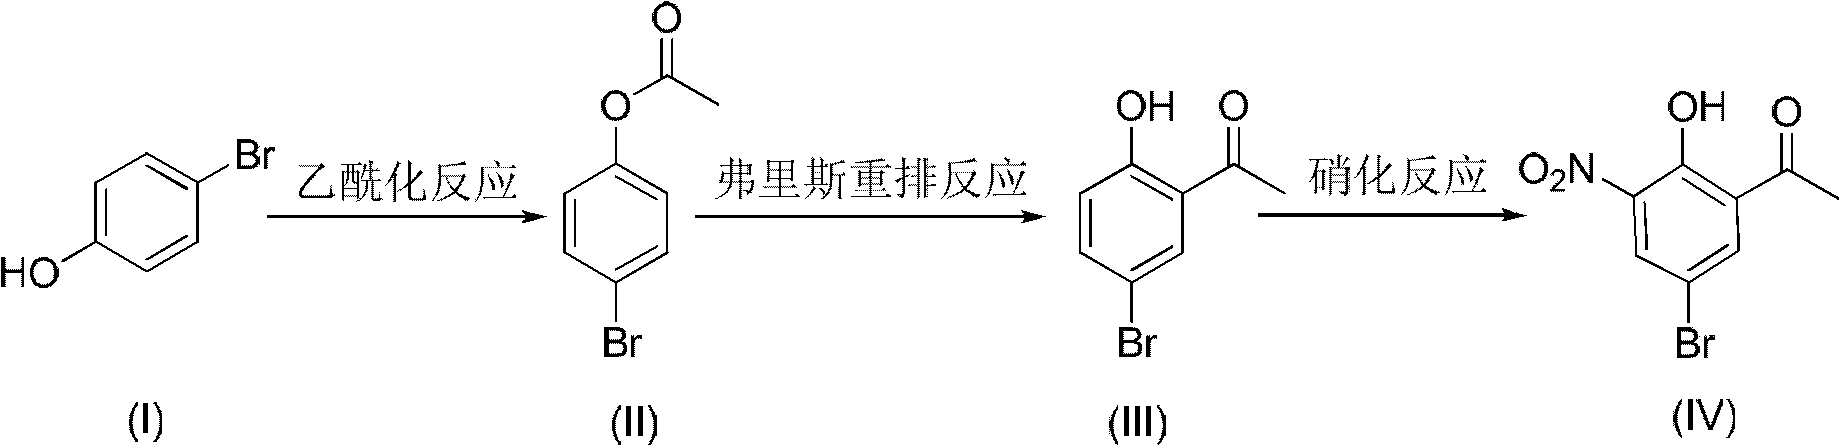 Method for preparing 5-bromo-2-hydroxy-3-nitroacetophenone